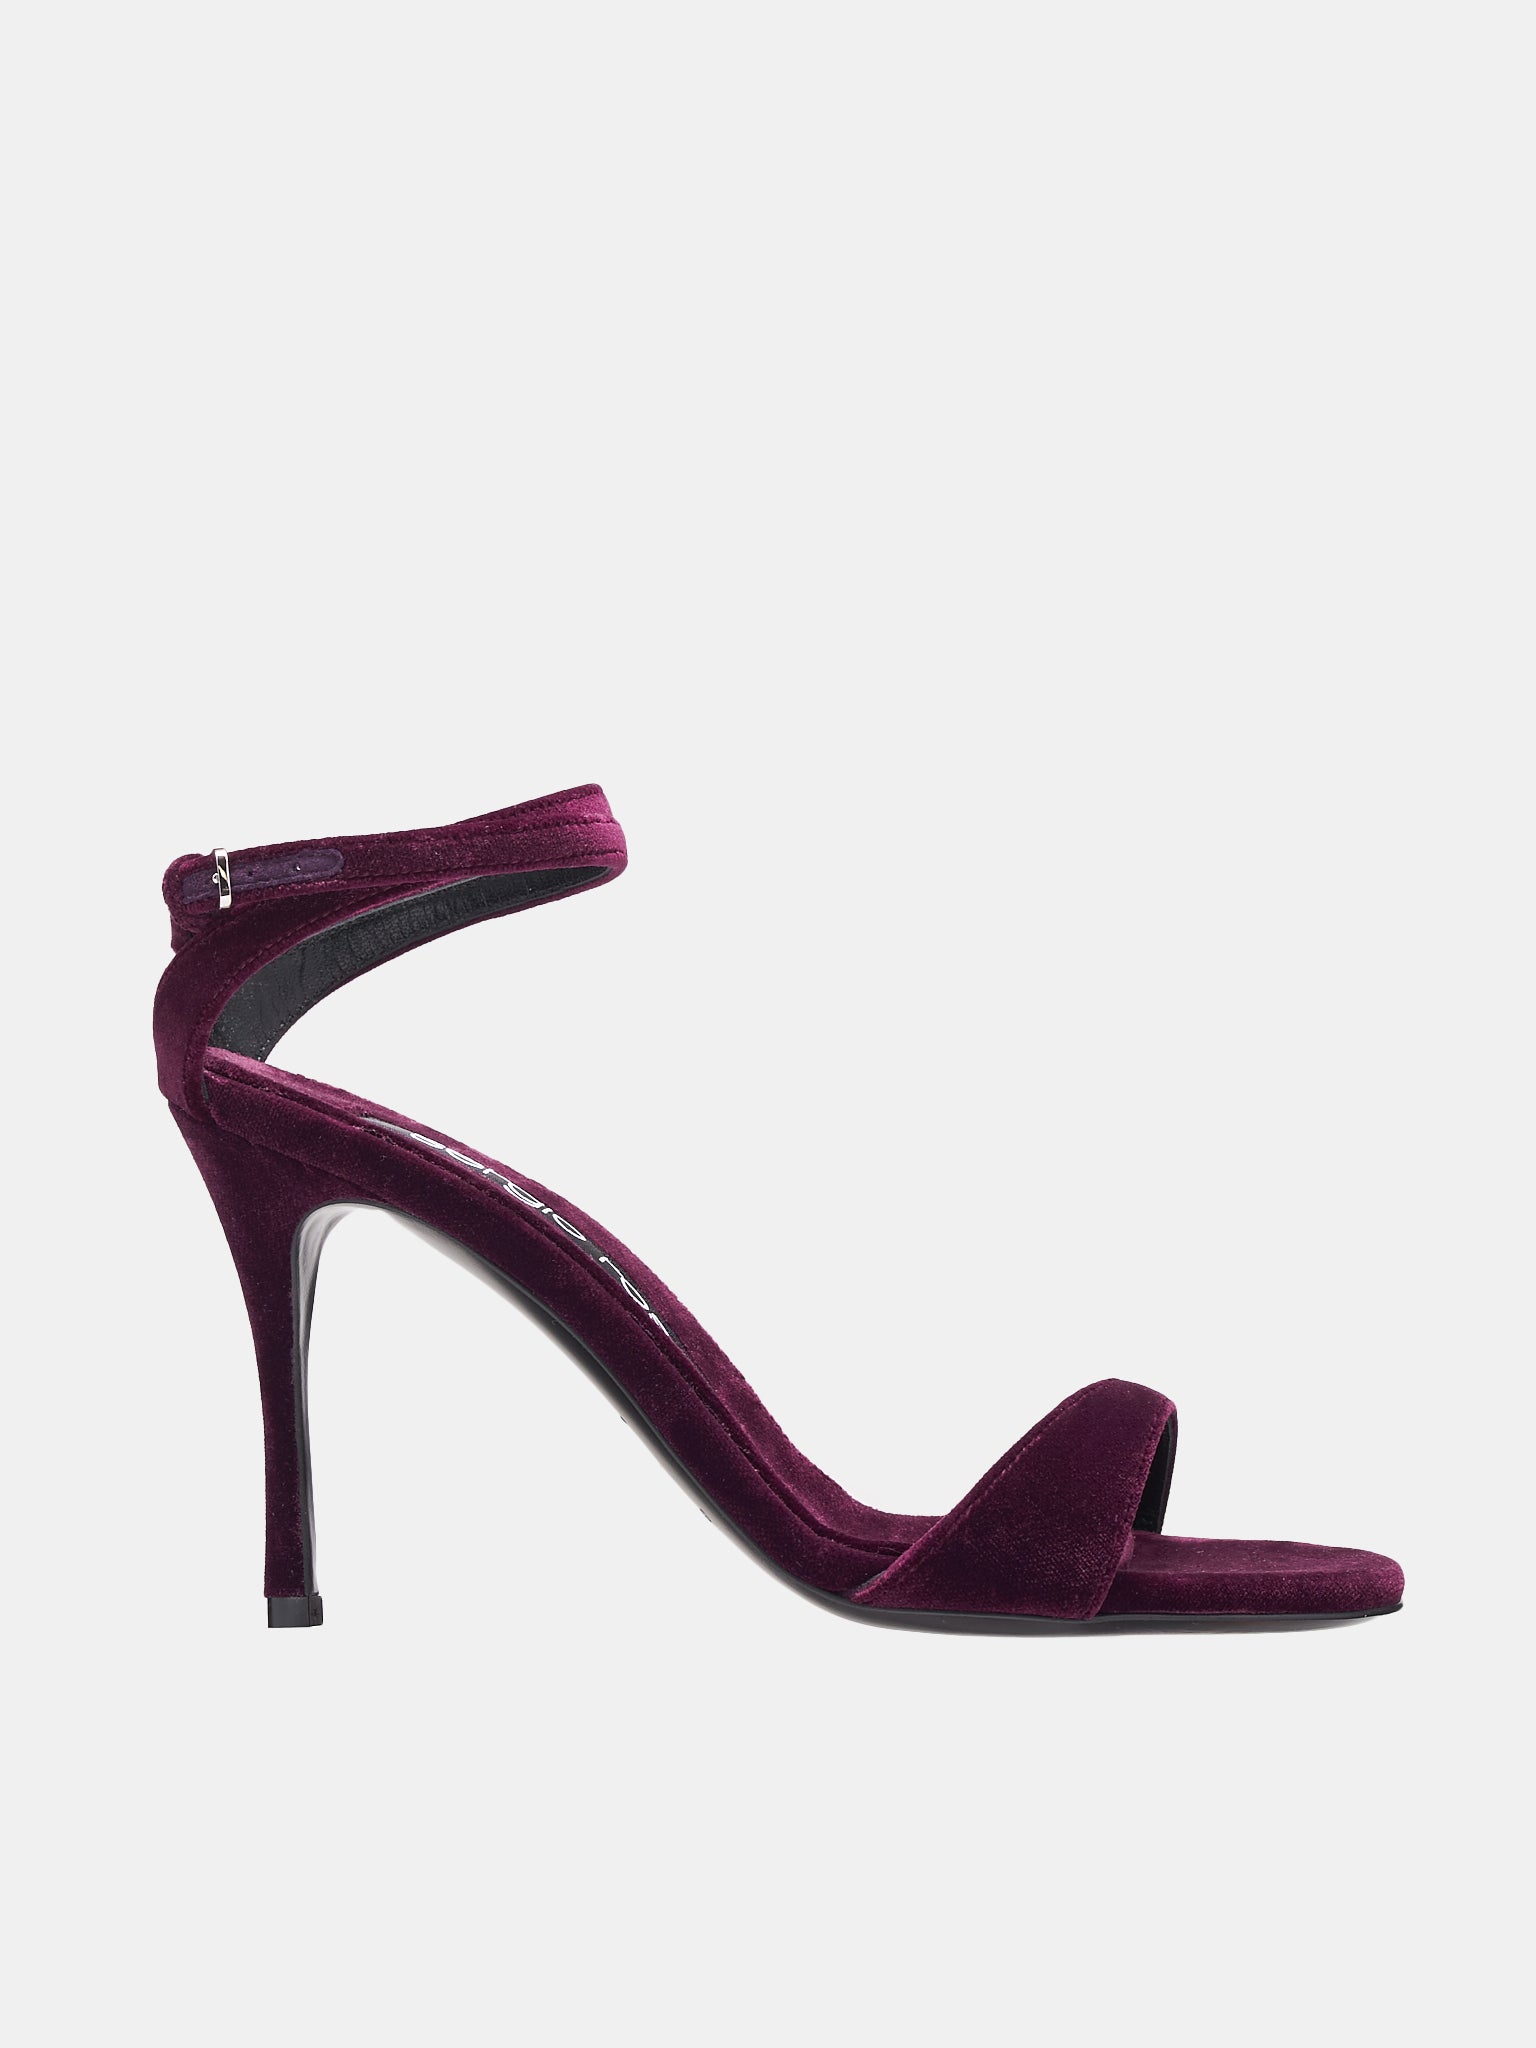 NEW Leon Max Women's Satin ANGLED HEEL Heels Sandals Shoes Size 5.5 PURPLE  | eBay